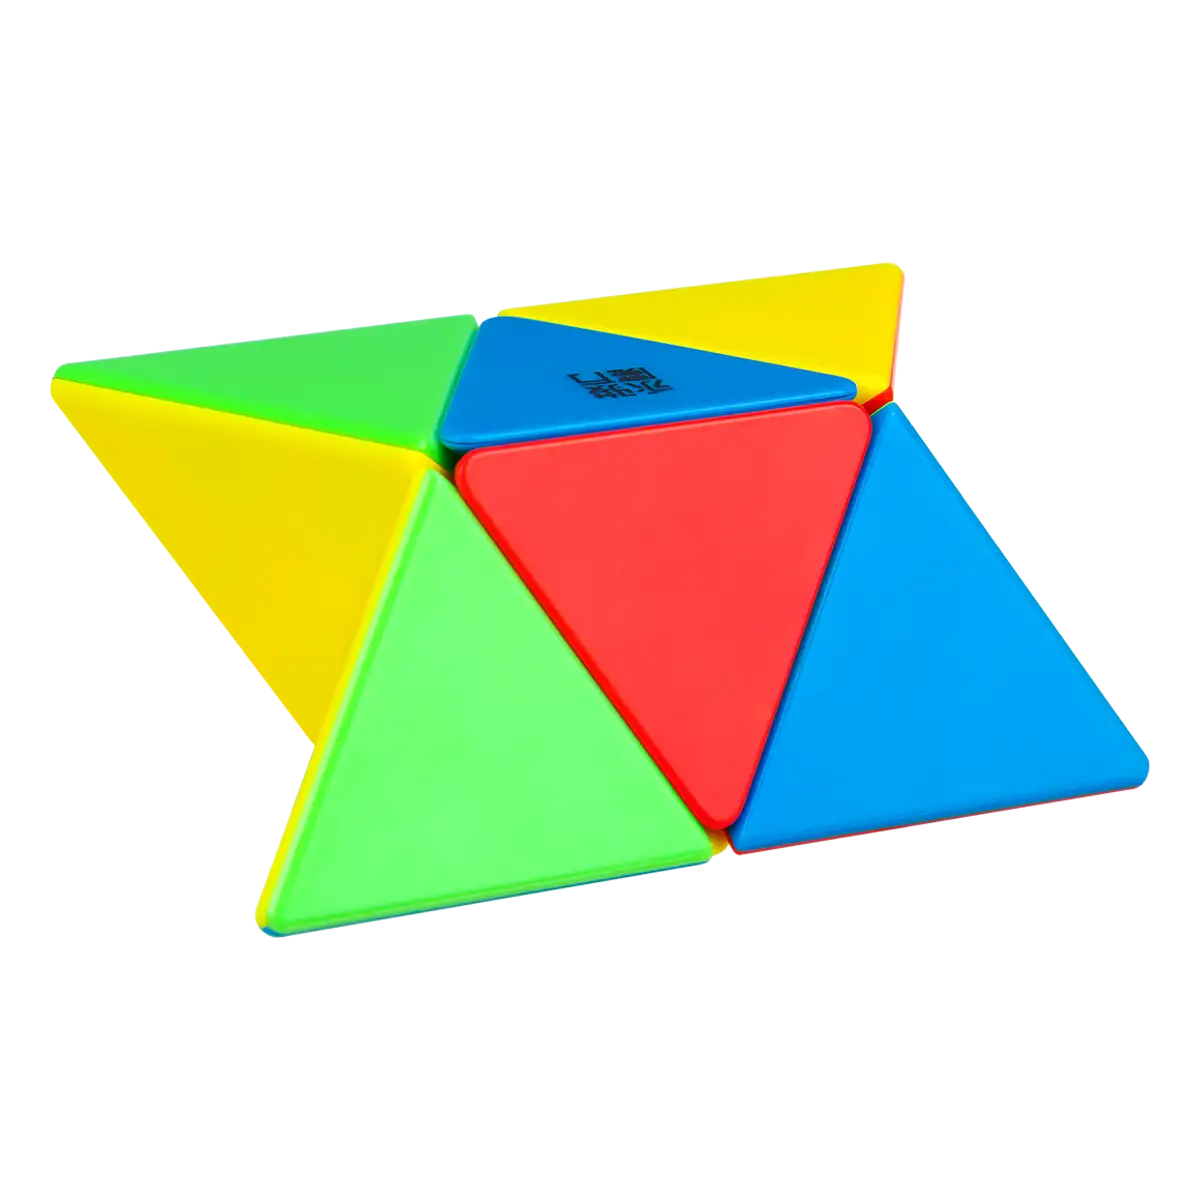 Pyramid 2x2 Image 4